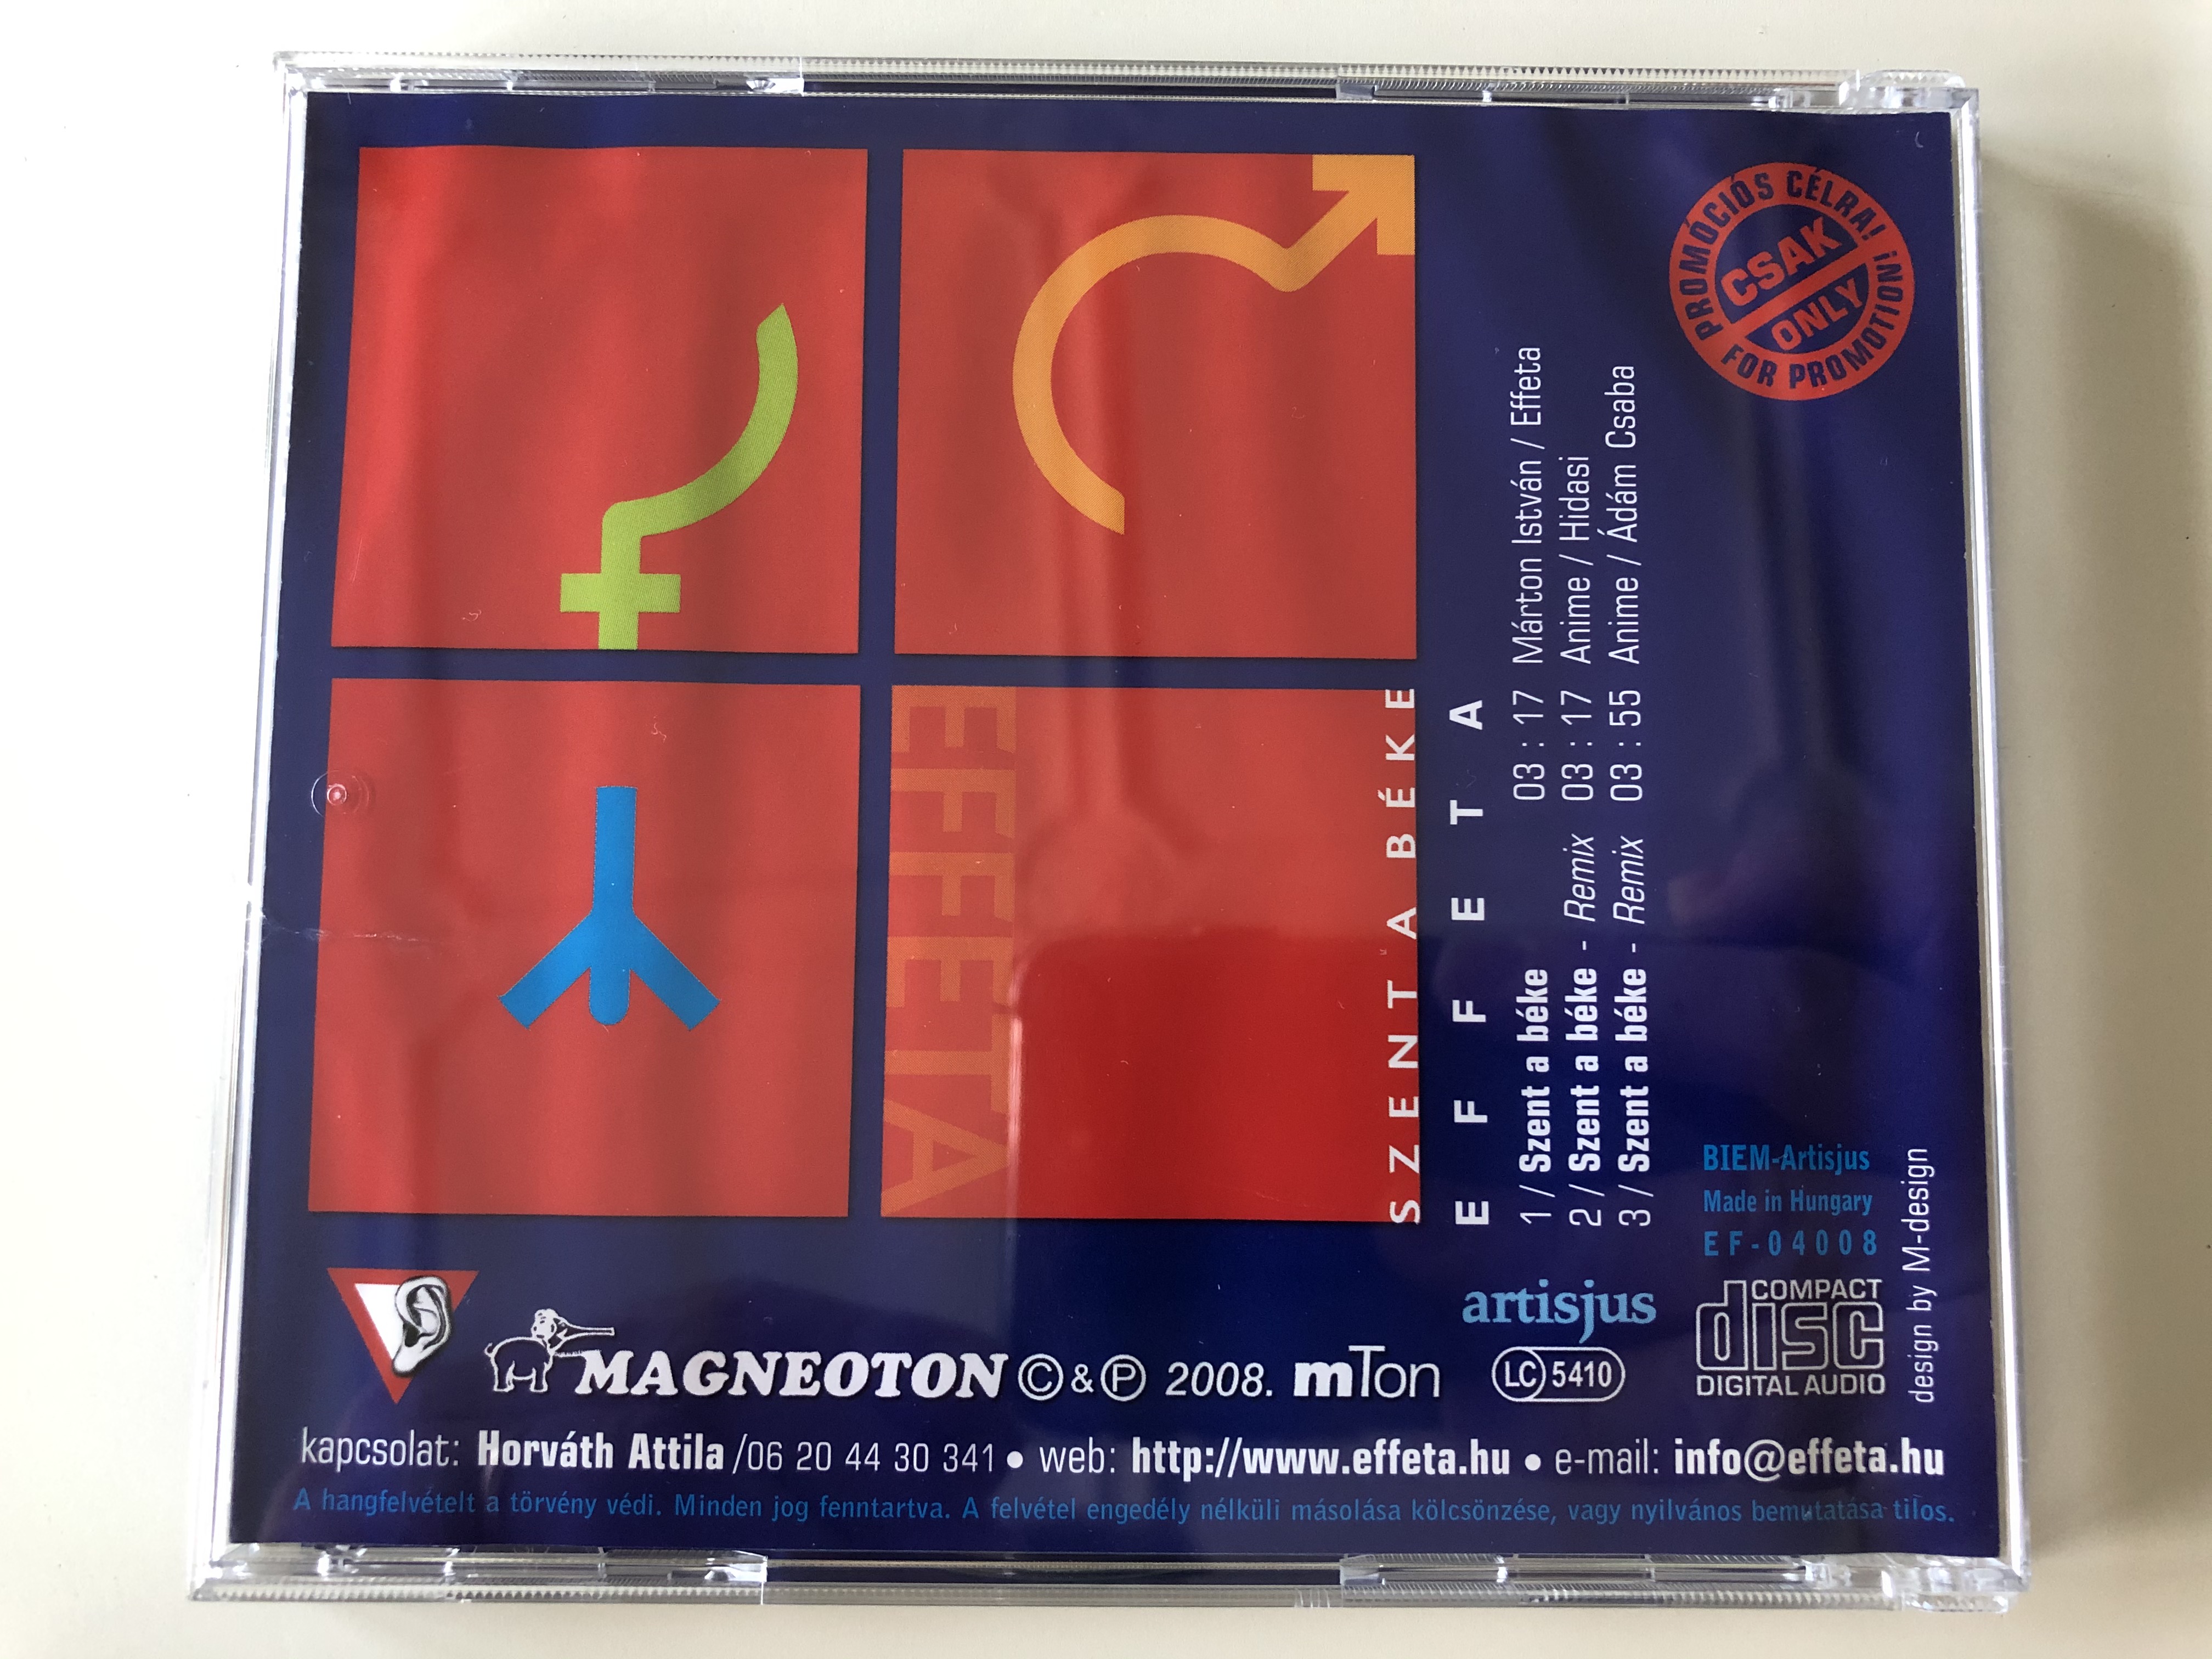 effeta-szent-a-b-ke-magneoton-audio-cd-2008-ef-04008-5-.jpg